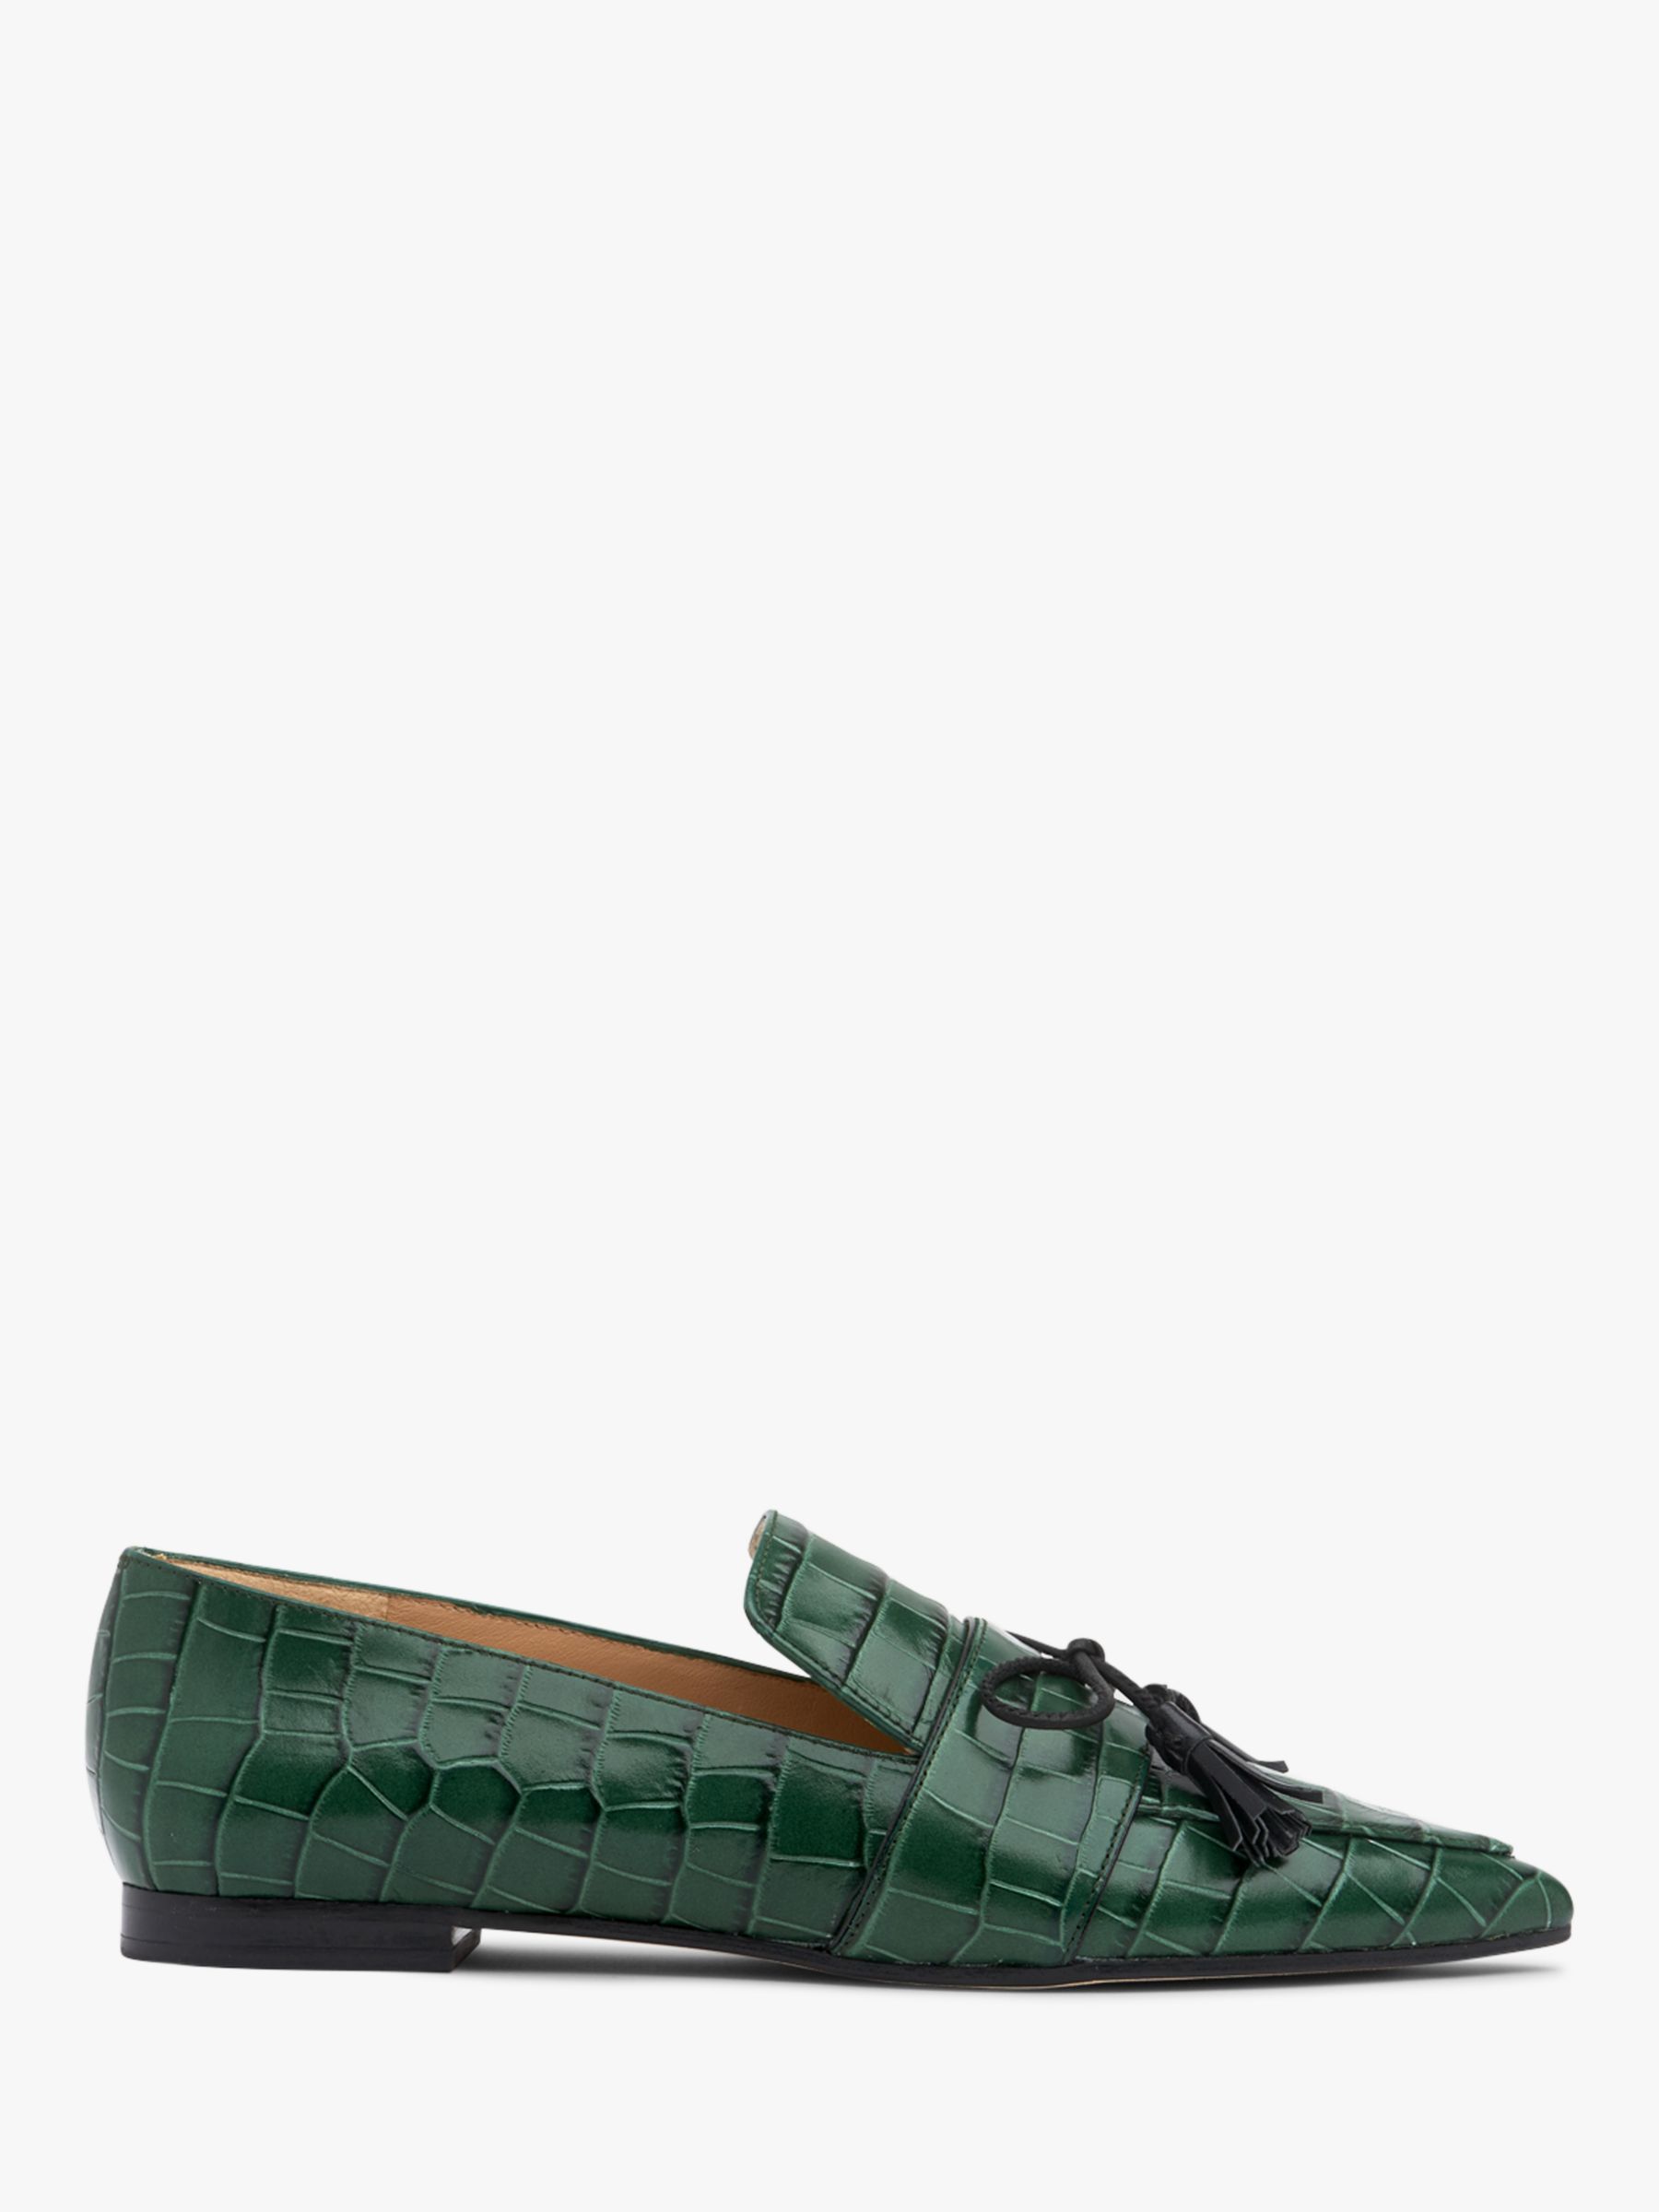 L.K.Bennett Celina Leather Tassel Loafers, Green